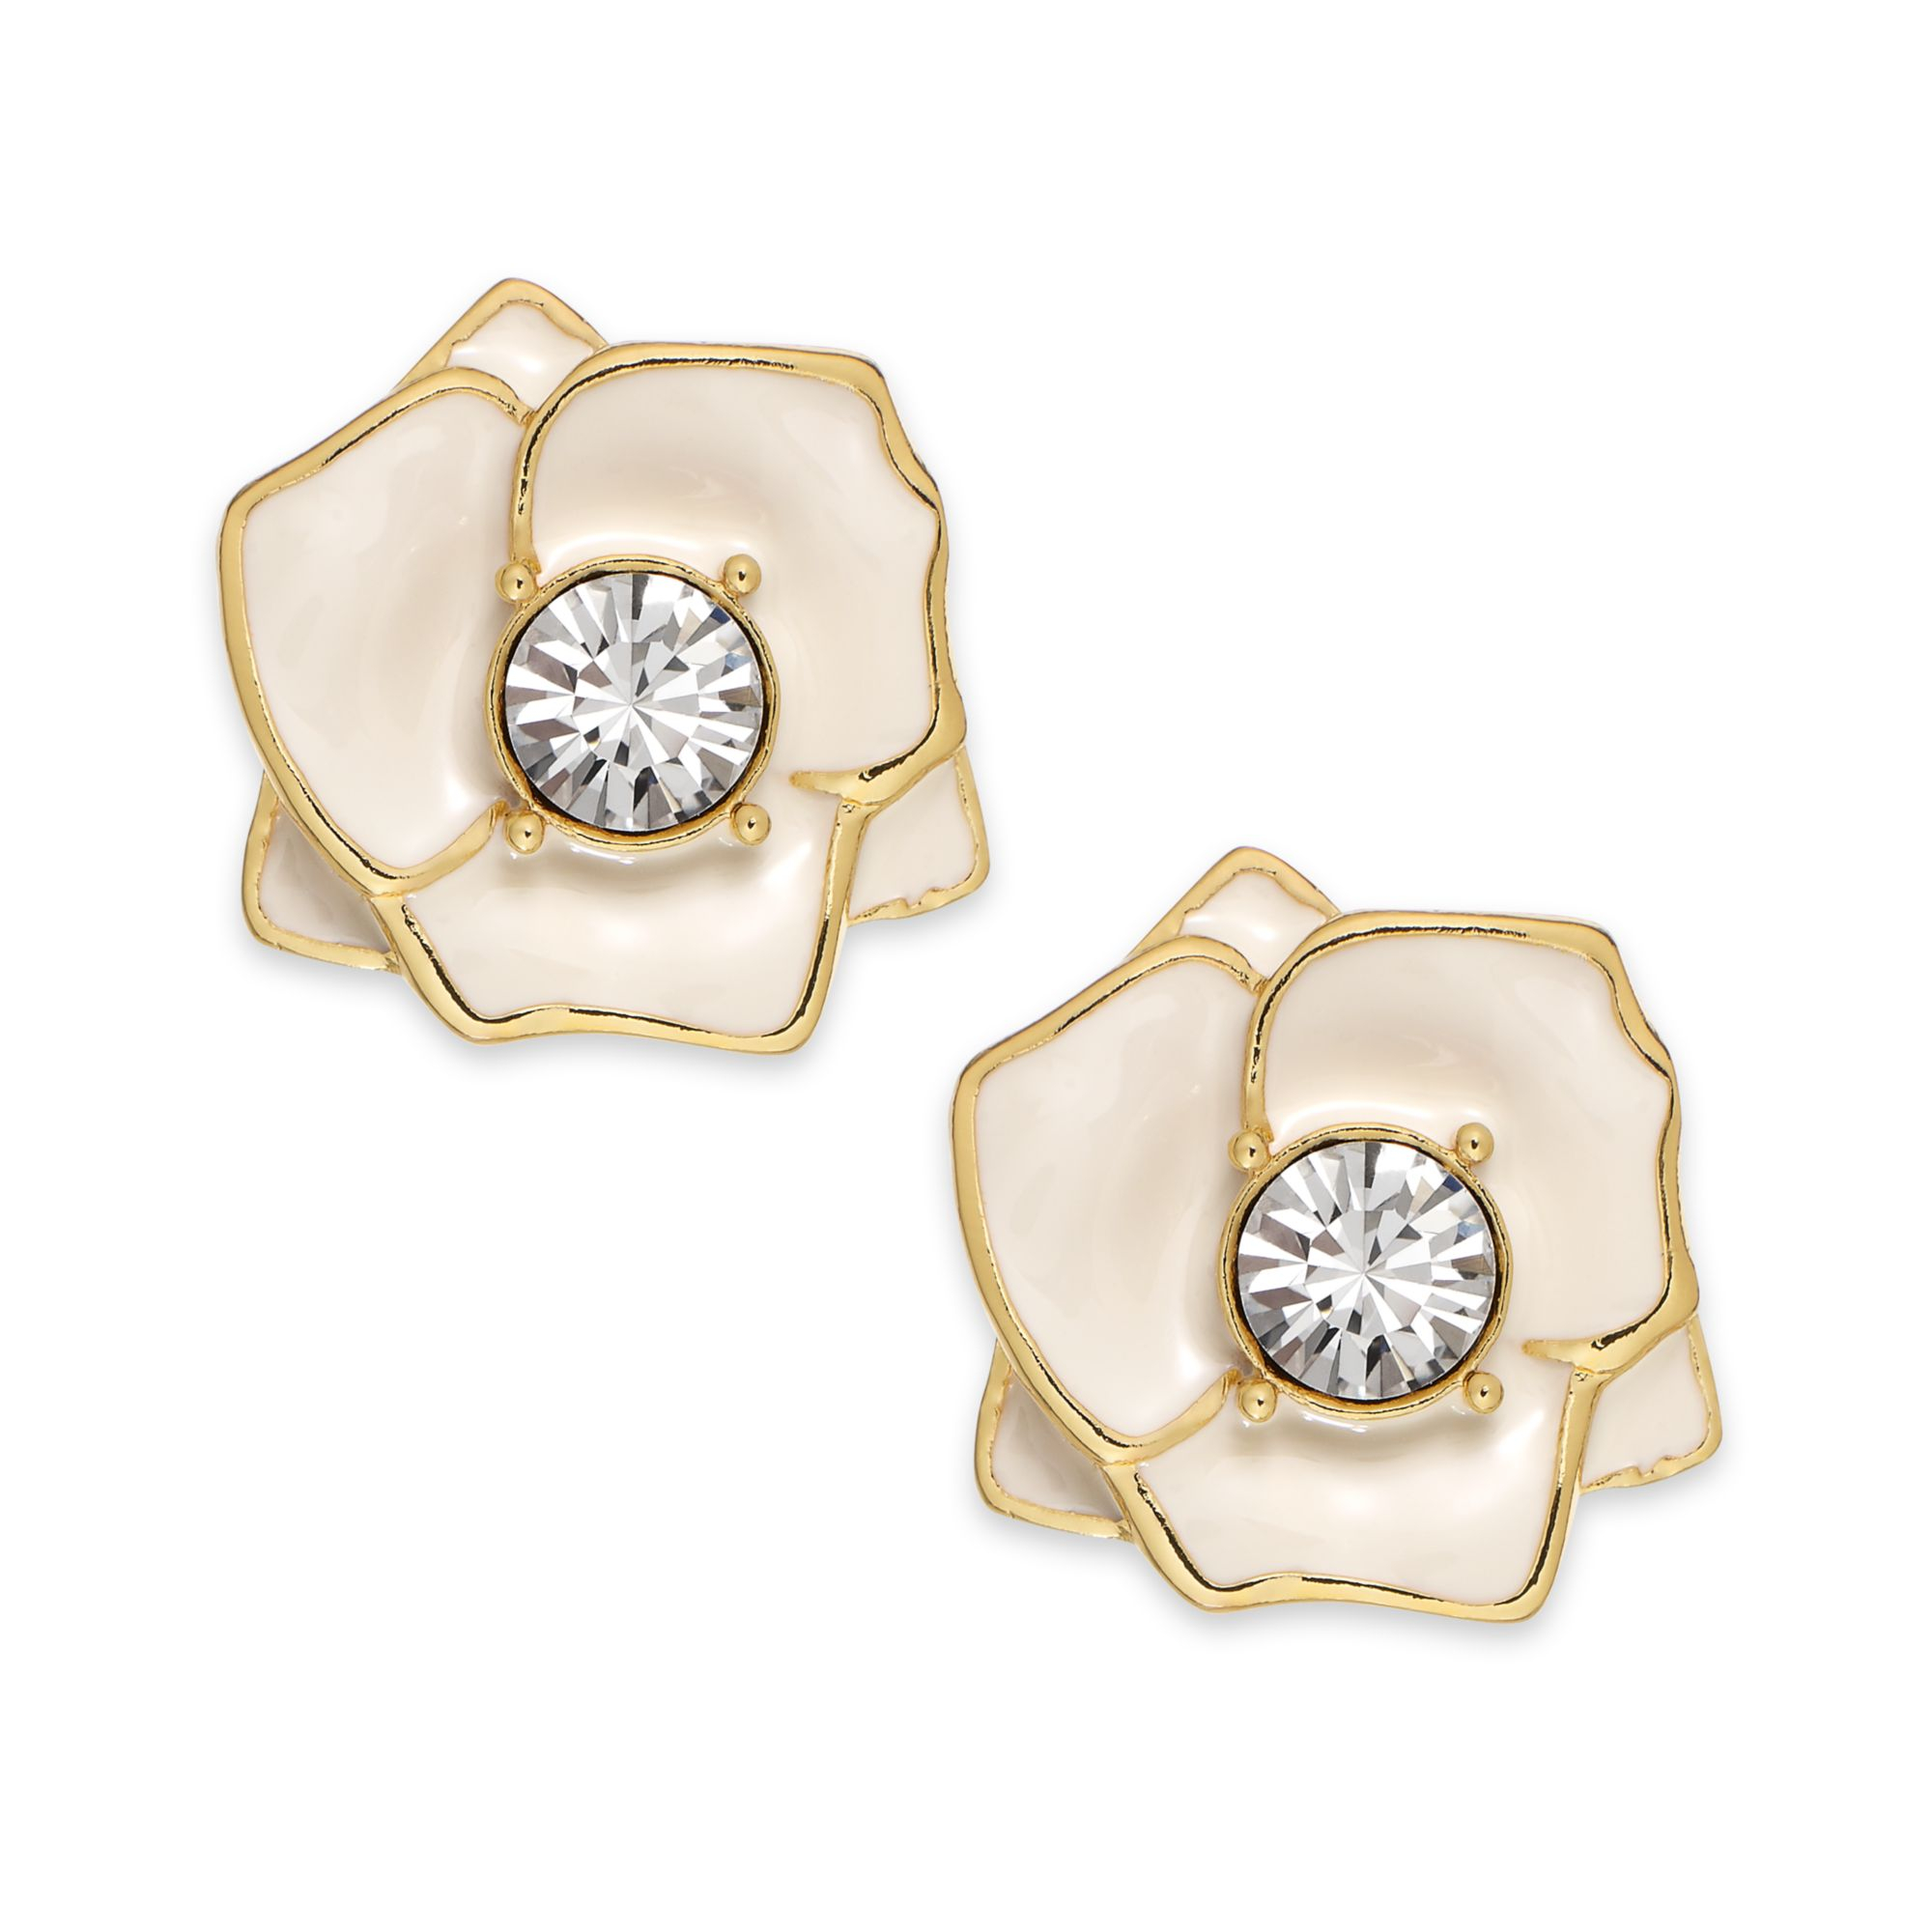 Kate spade new york Gold-Tone Ivory Enamel Flower Stud Earrings in